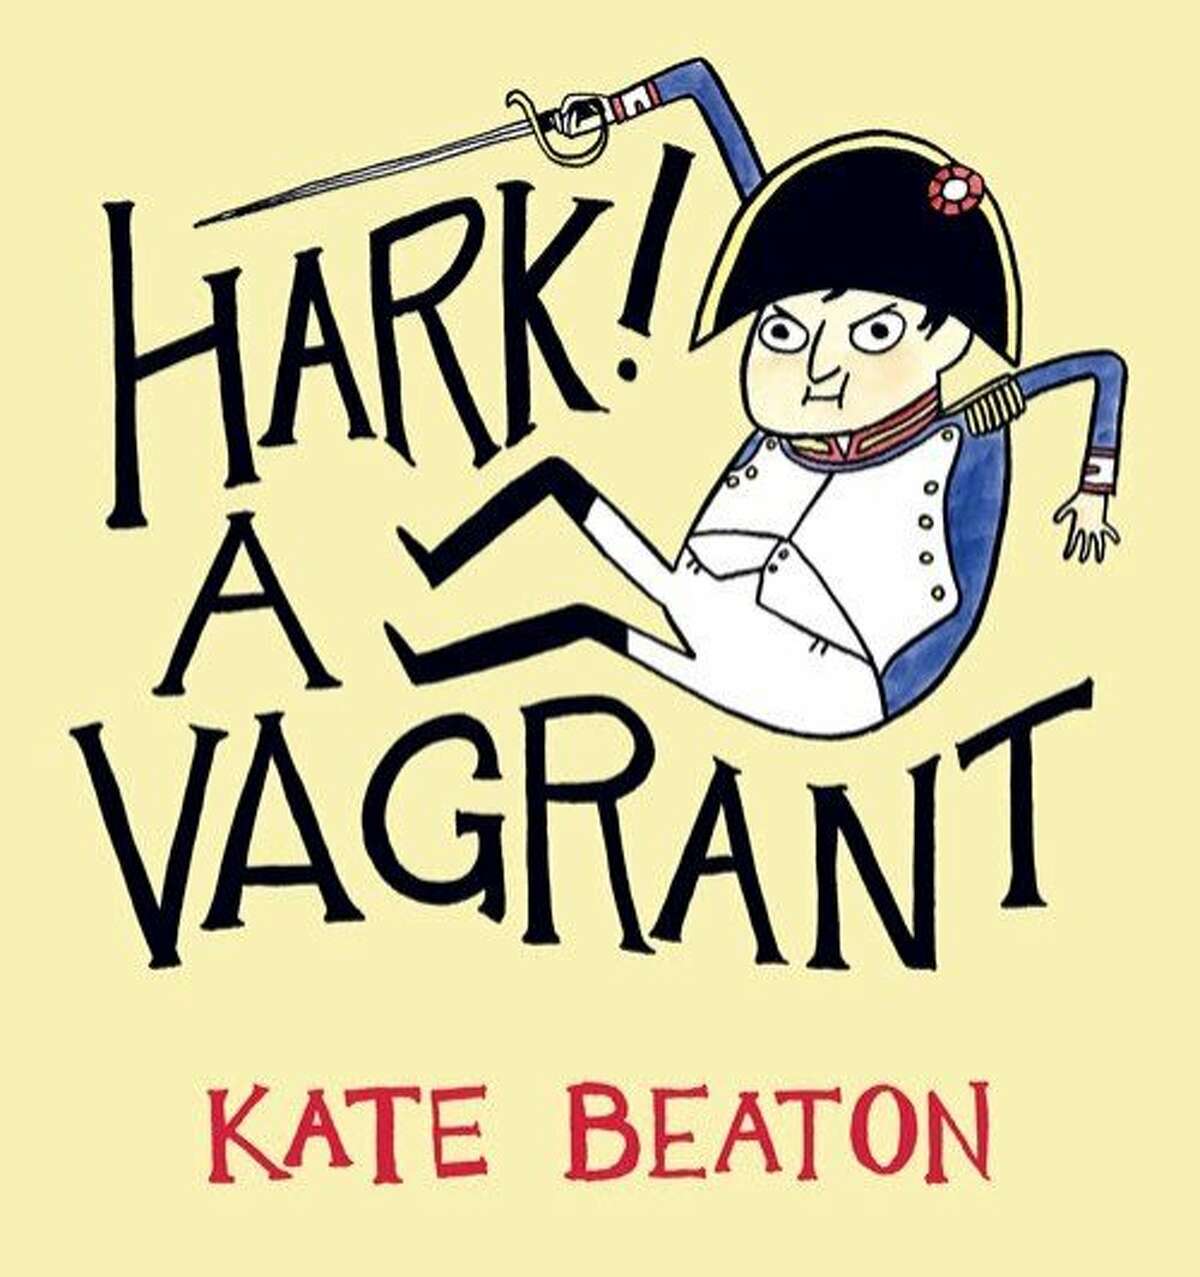 Kate Beaton’s "Hark! A Vagrant"